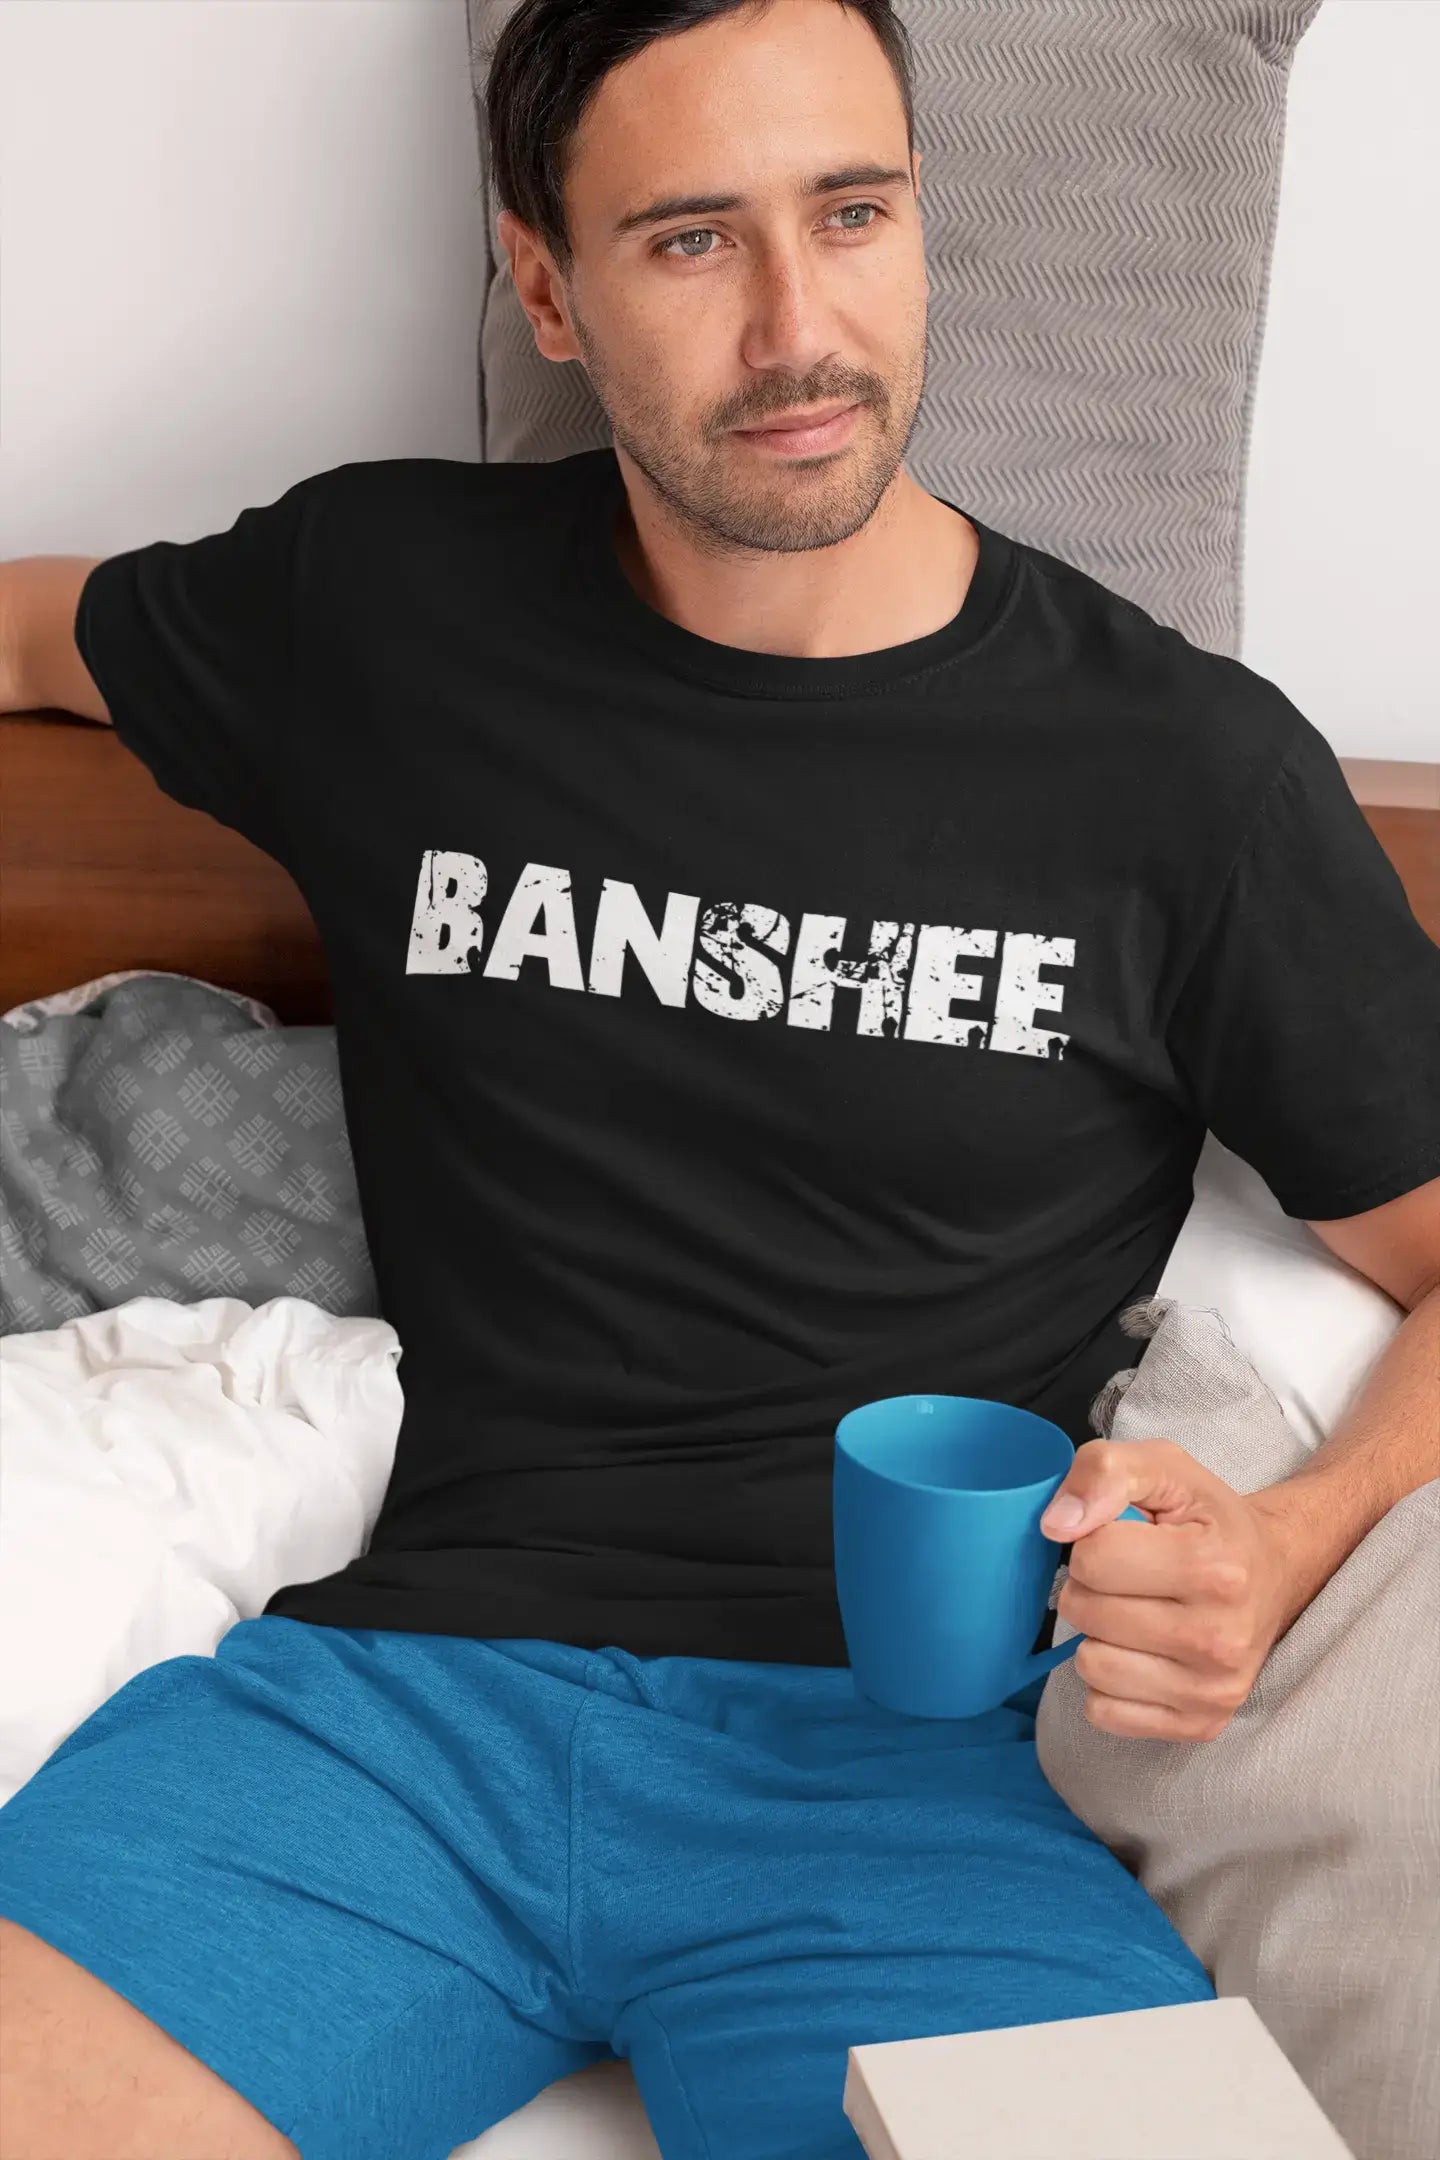 banshee Men's Vintage T shirt Black Birthday Gift 00555